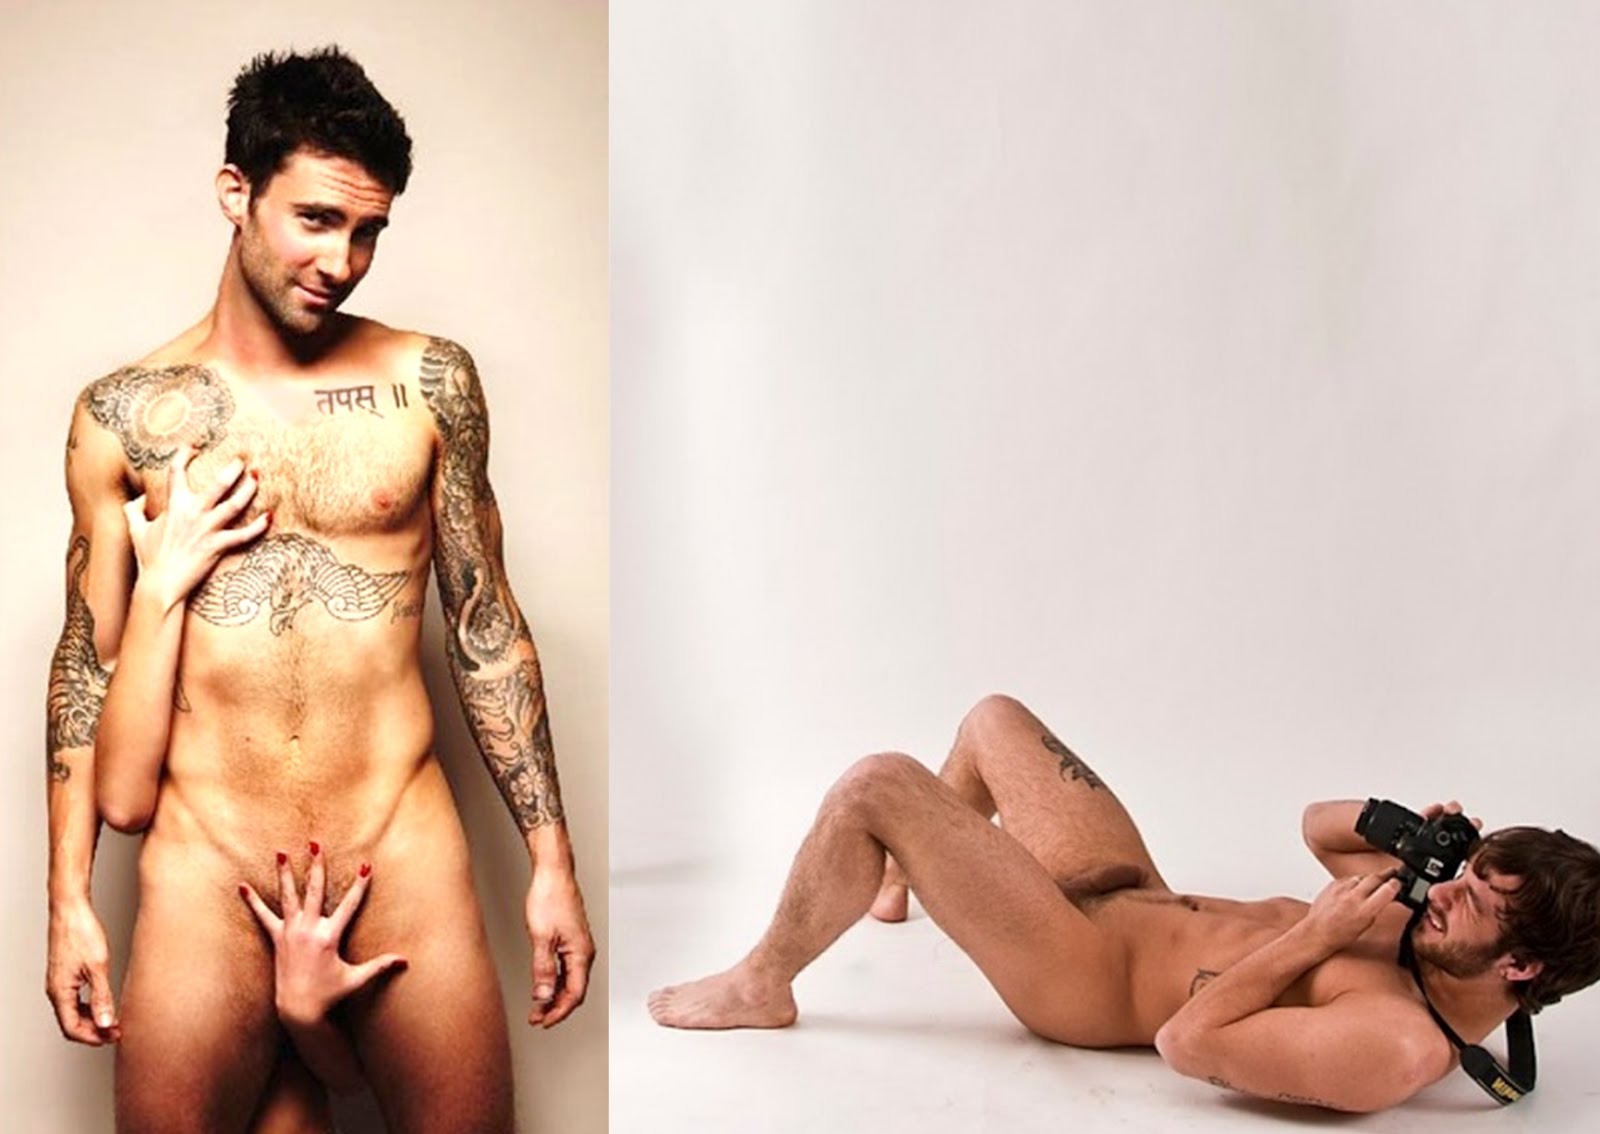 Adam lambert naked pictures